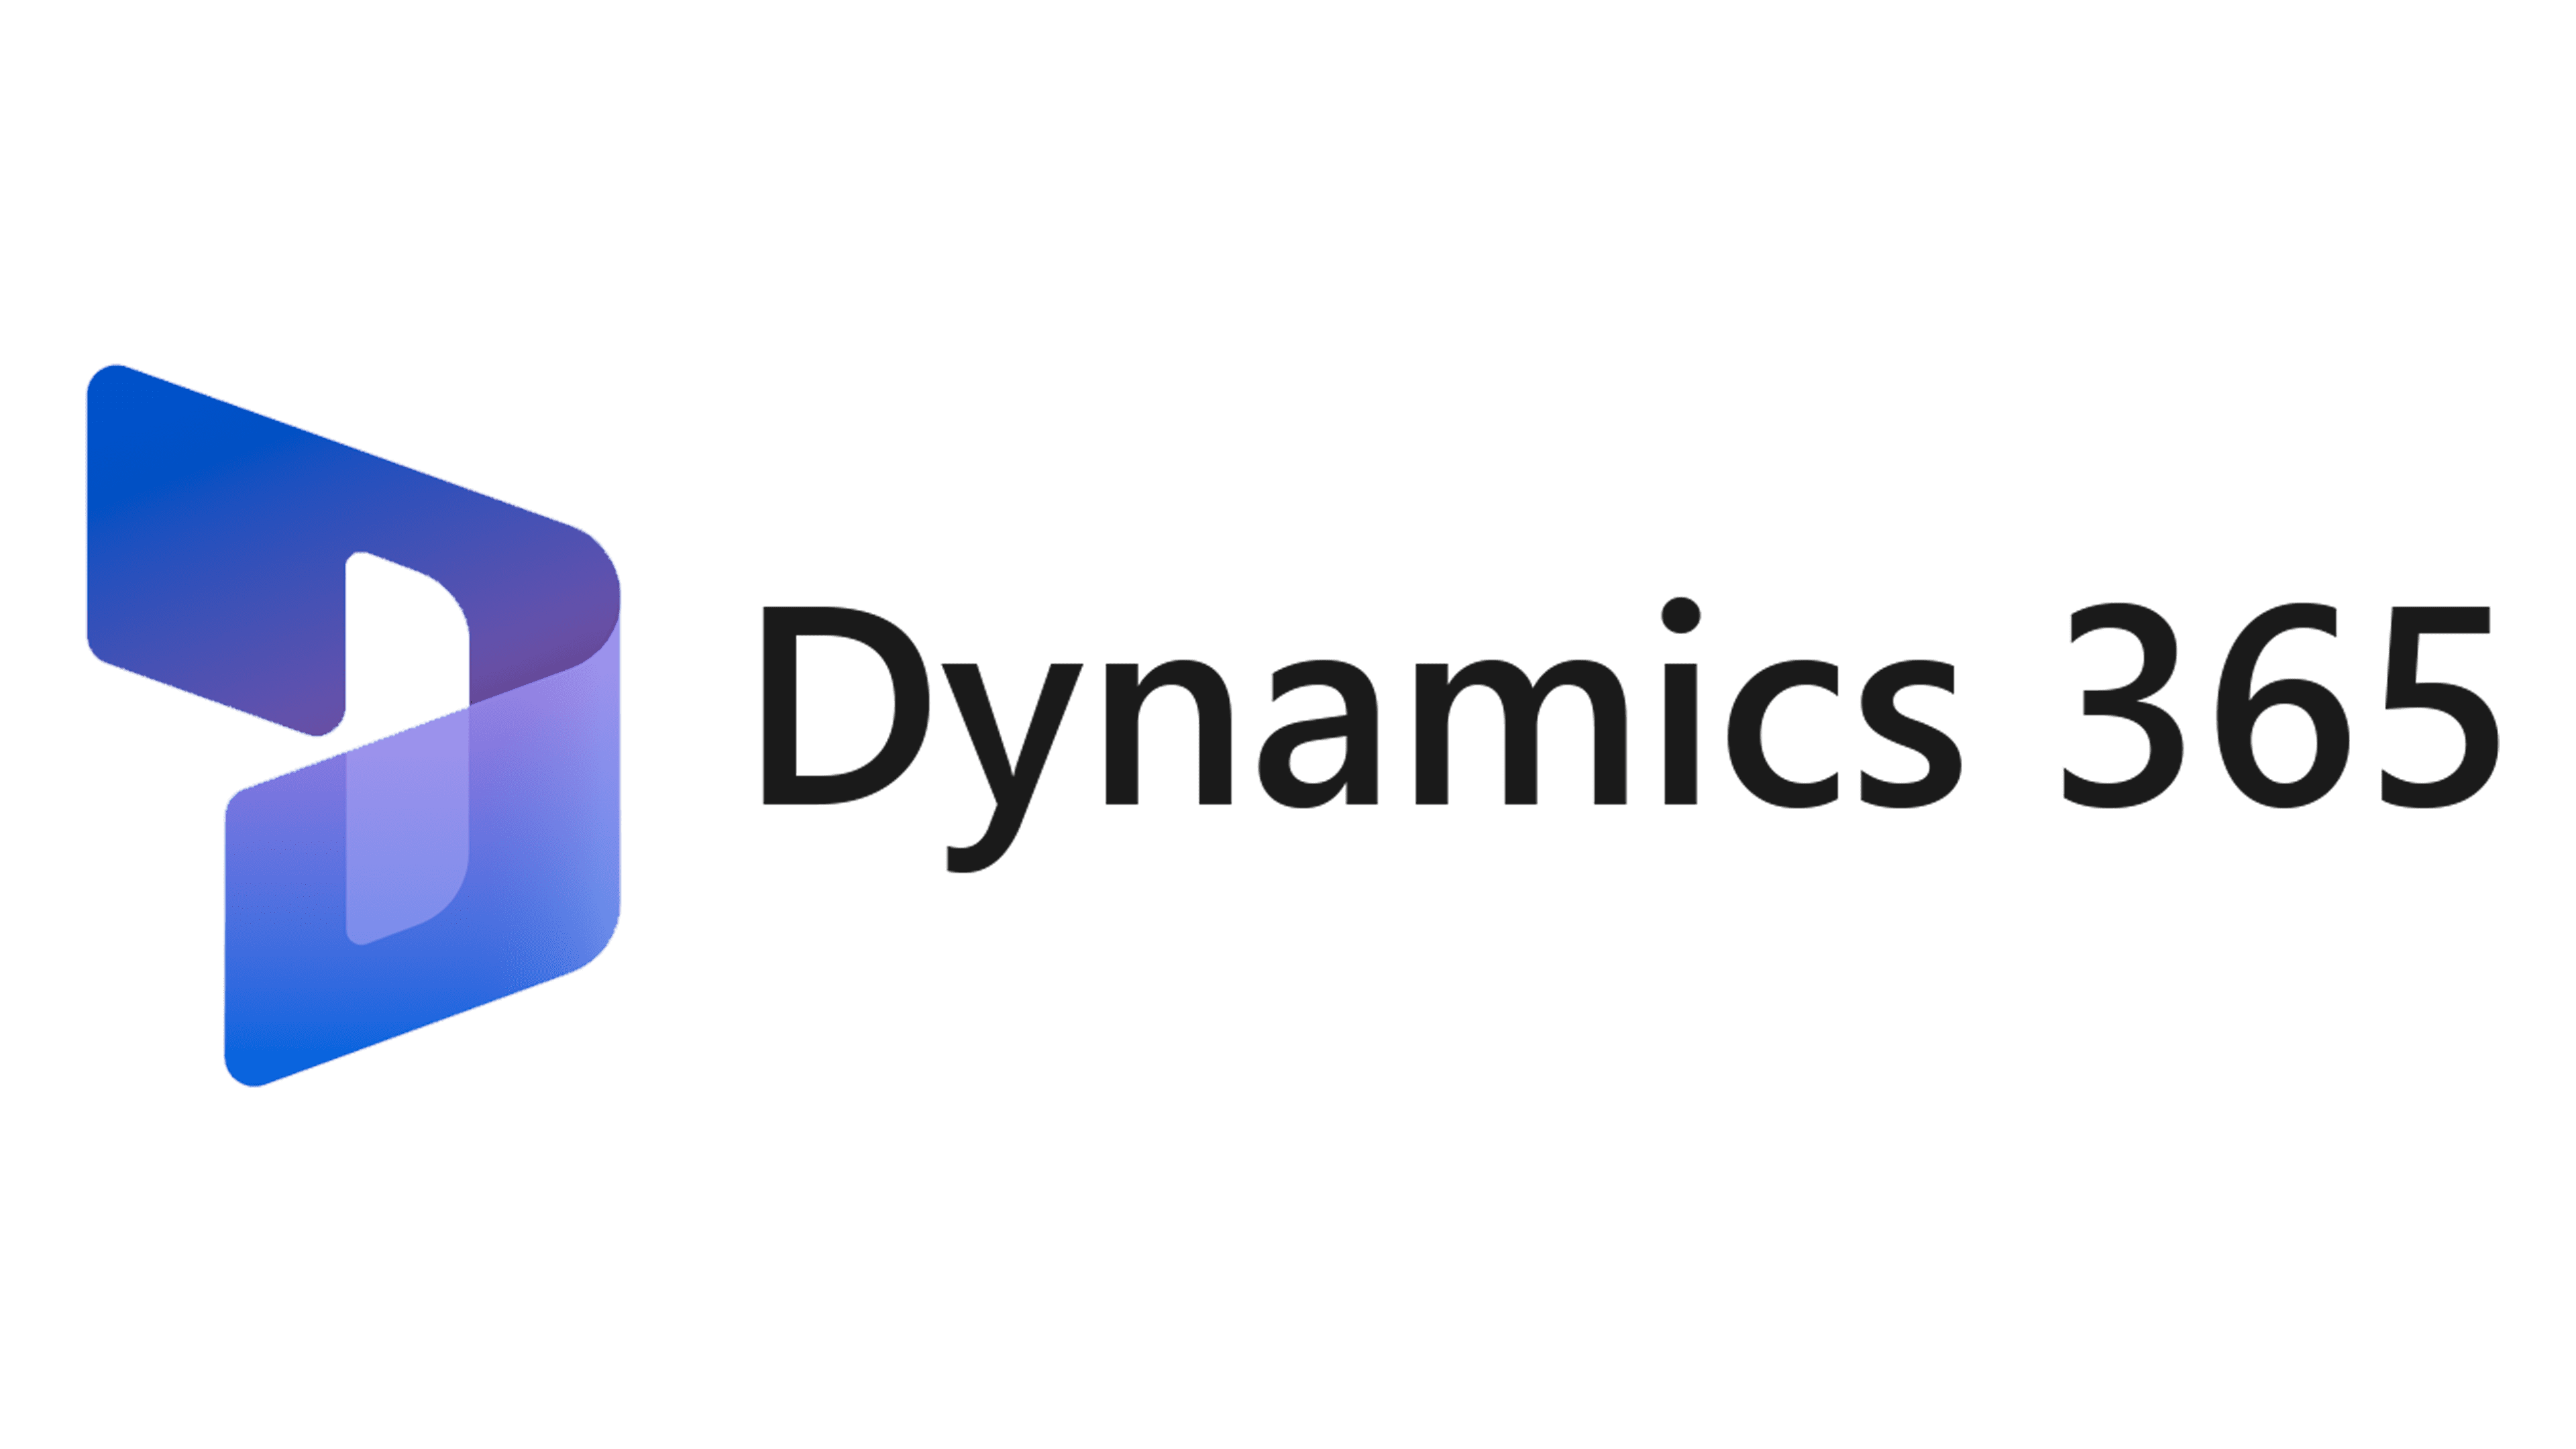 MS Dynamics 365